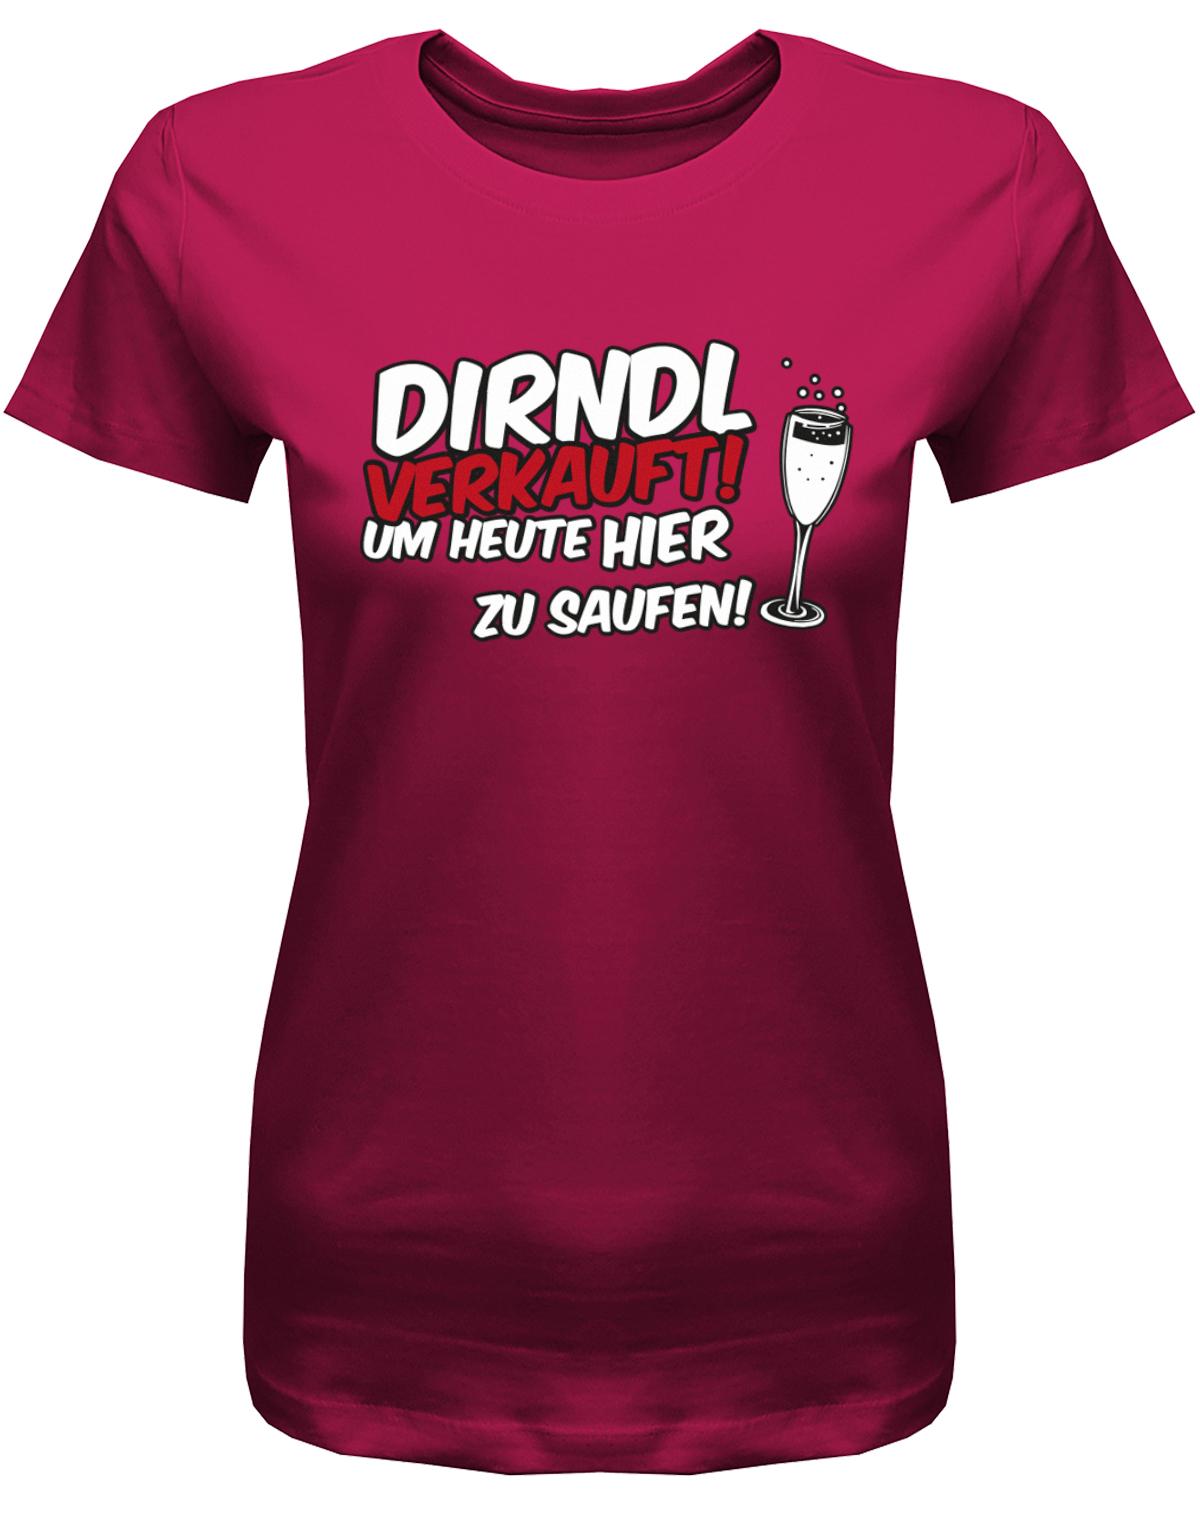 Dirndl-verkauft-um-heute-hier-zu-saufen-Damen-Shirt-Ssorbet